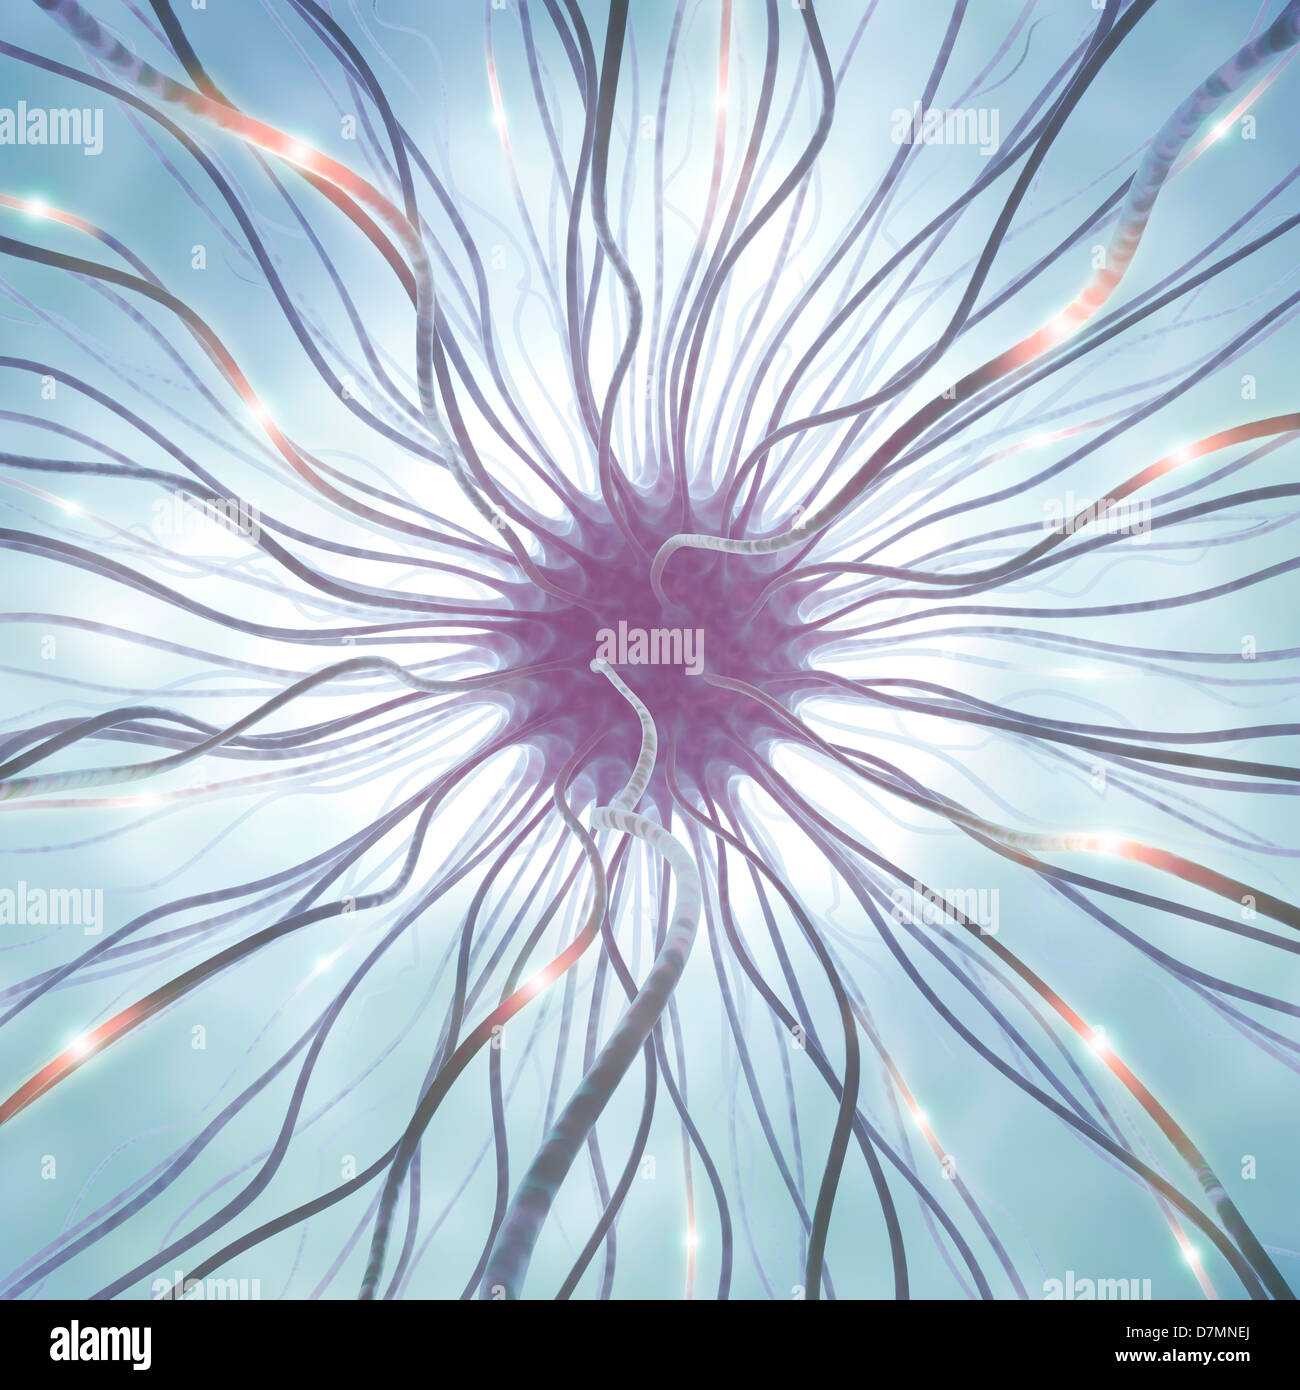 Nerve cell, artwork Stock Photo